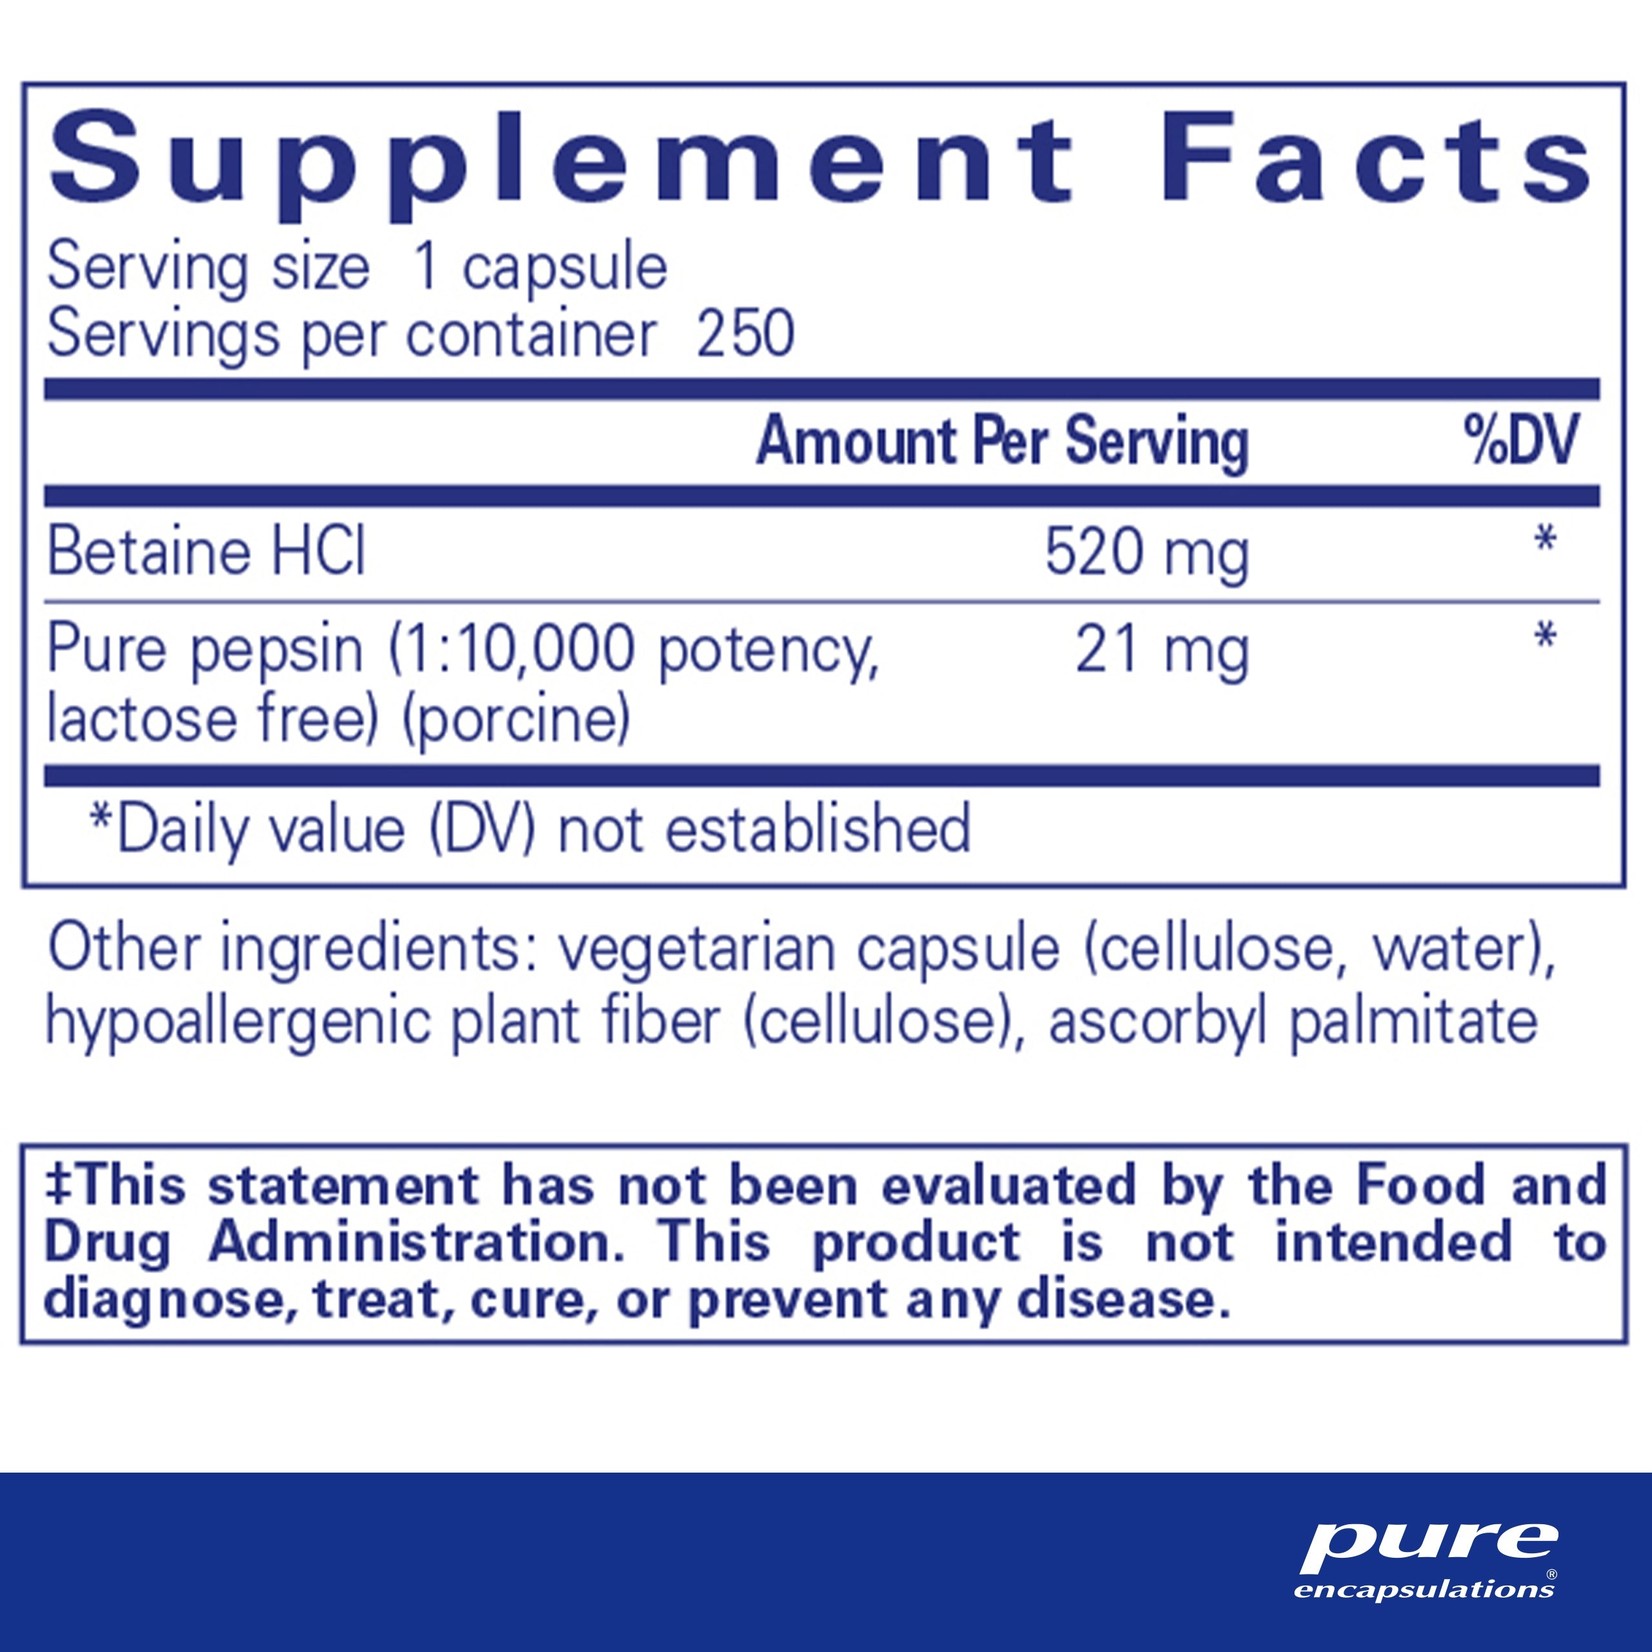 Pure Encapsulations Pure Encapsulations - Betaine Hcl - 250 Capsules